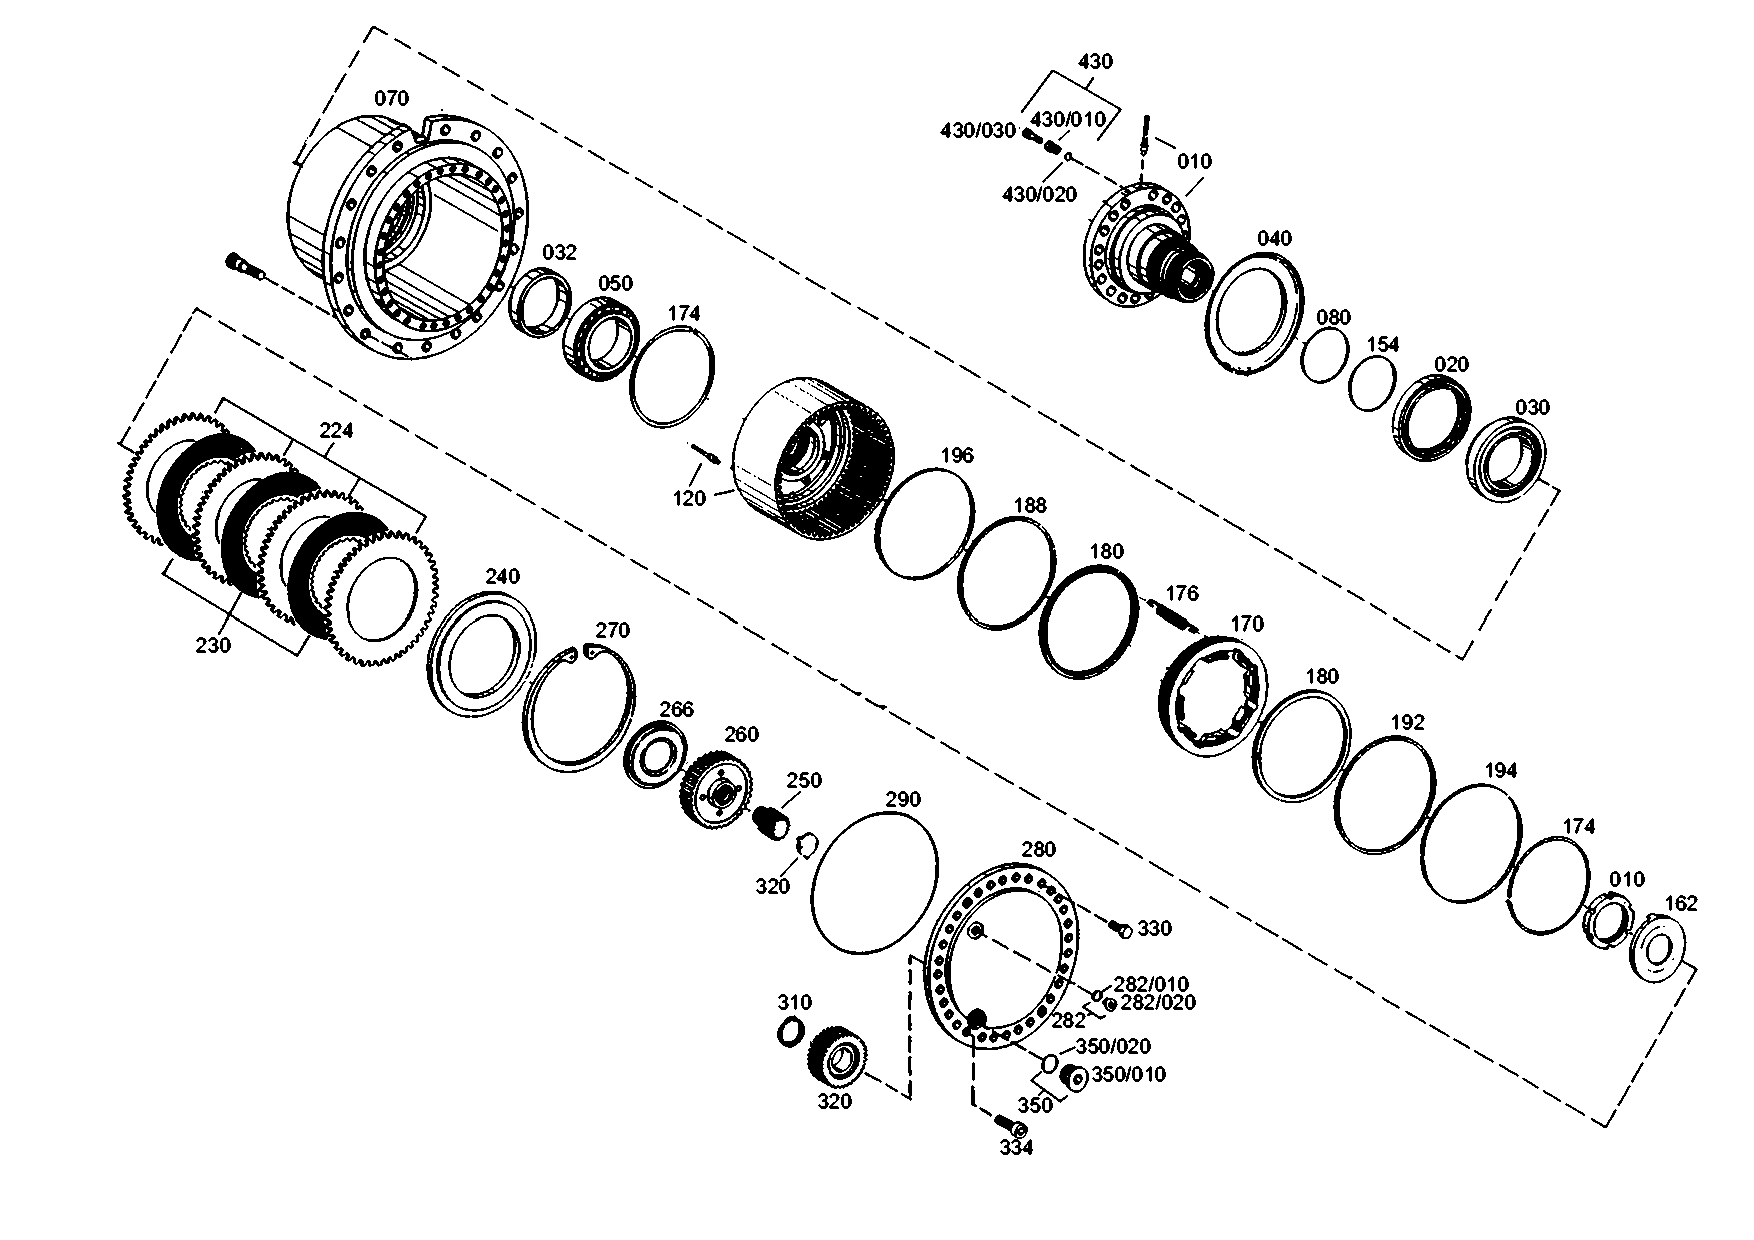 drawing for EVOBUS 0022851631 - SCREEN SHEET (figure 2)